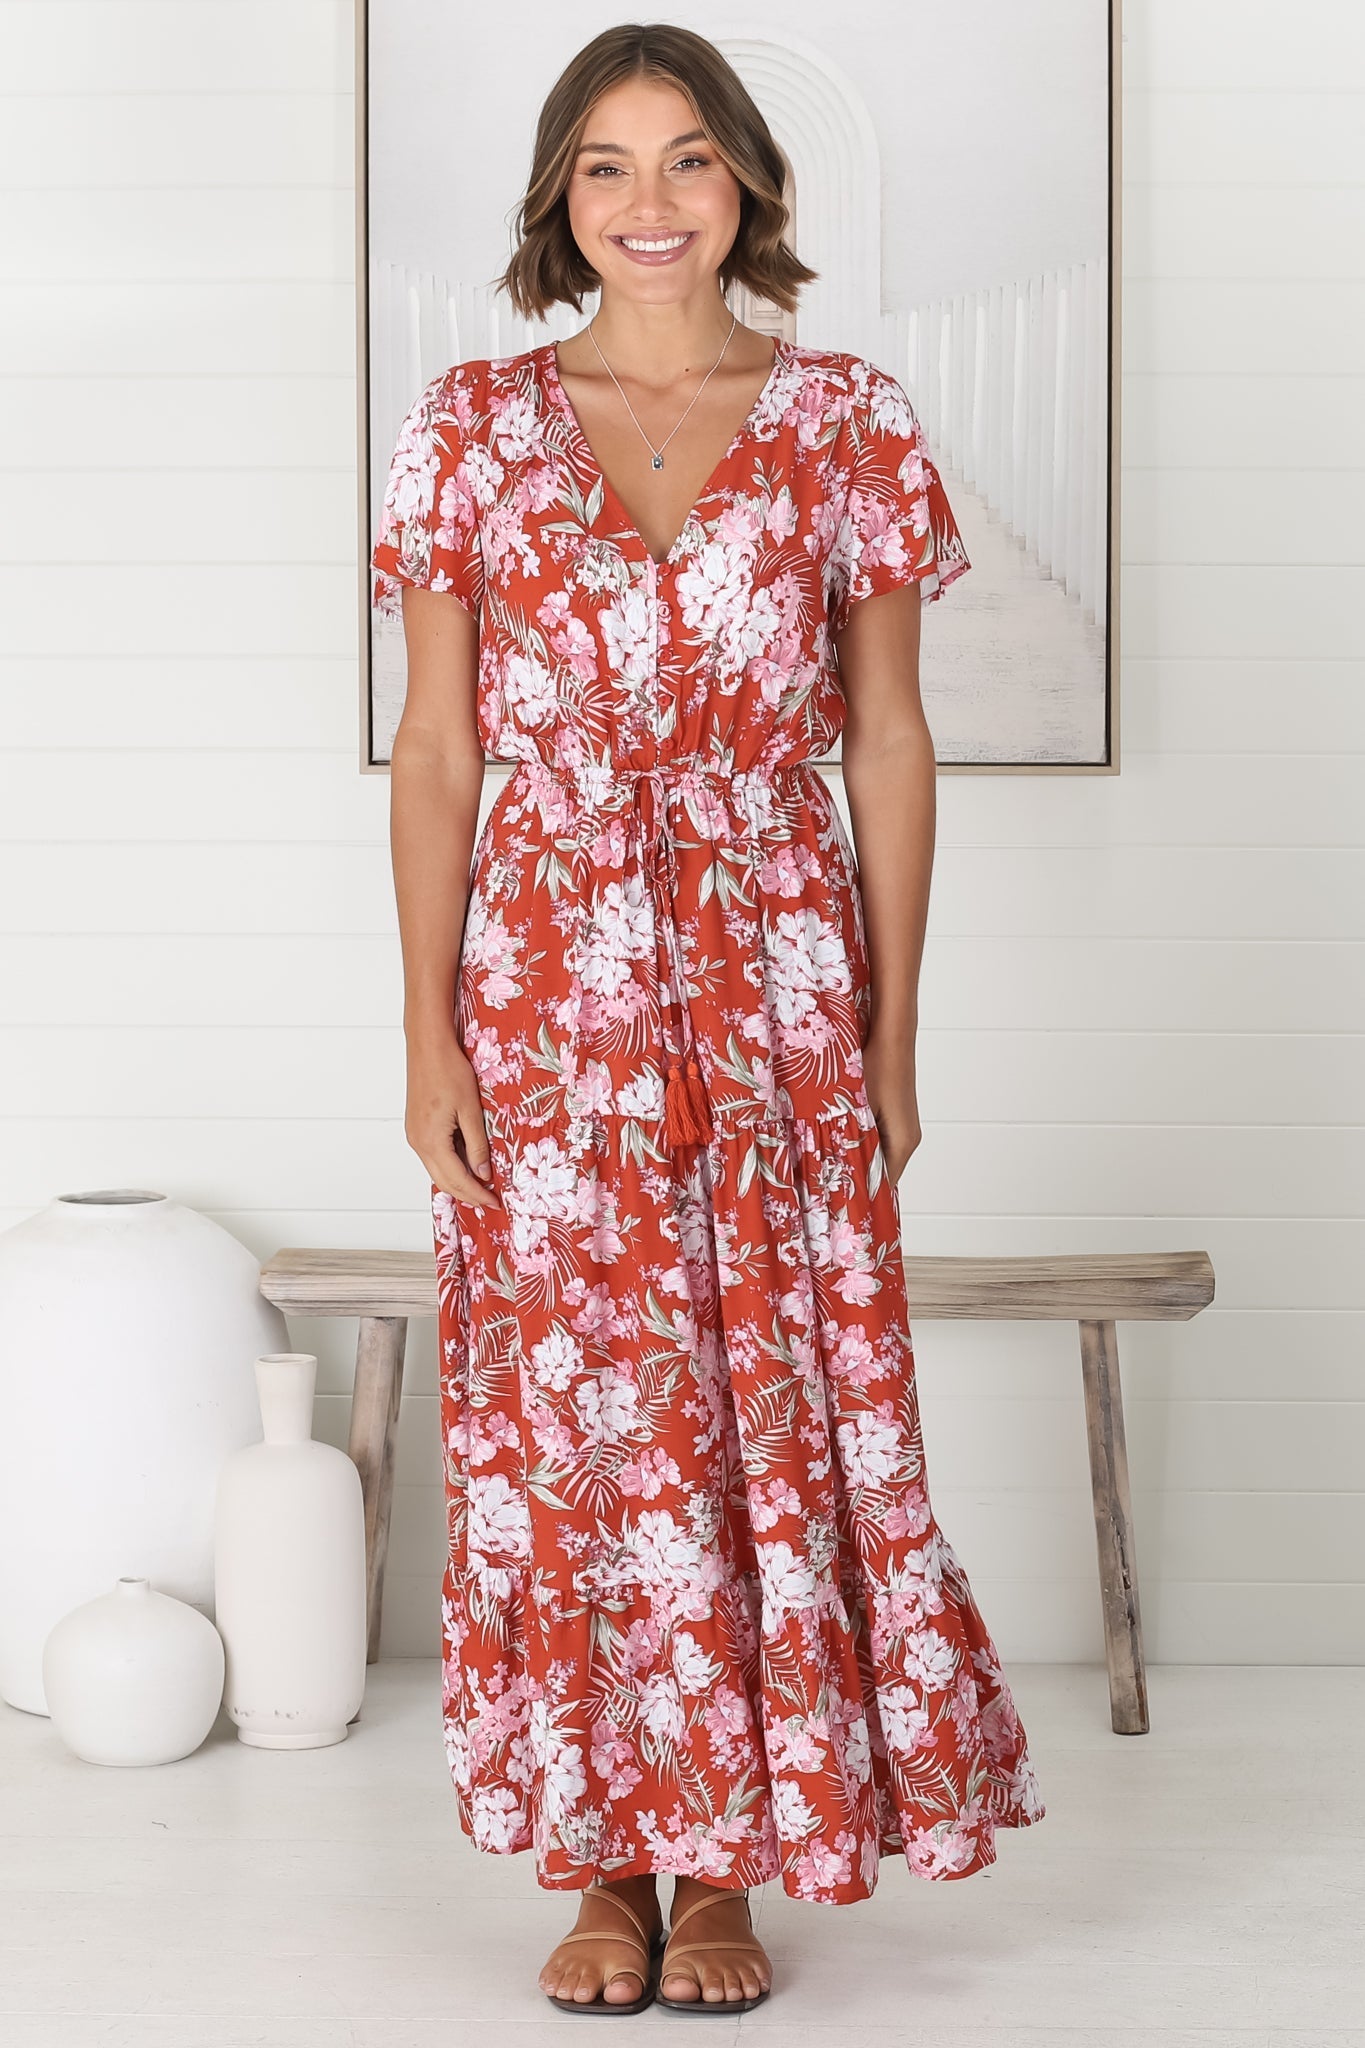 Derla Maxi Dress - V Neck A Line Dress with Tassel Pull Tie Wasit in Willa Print